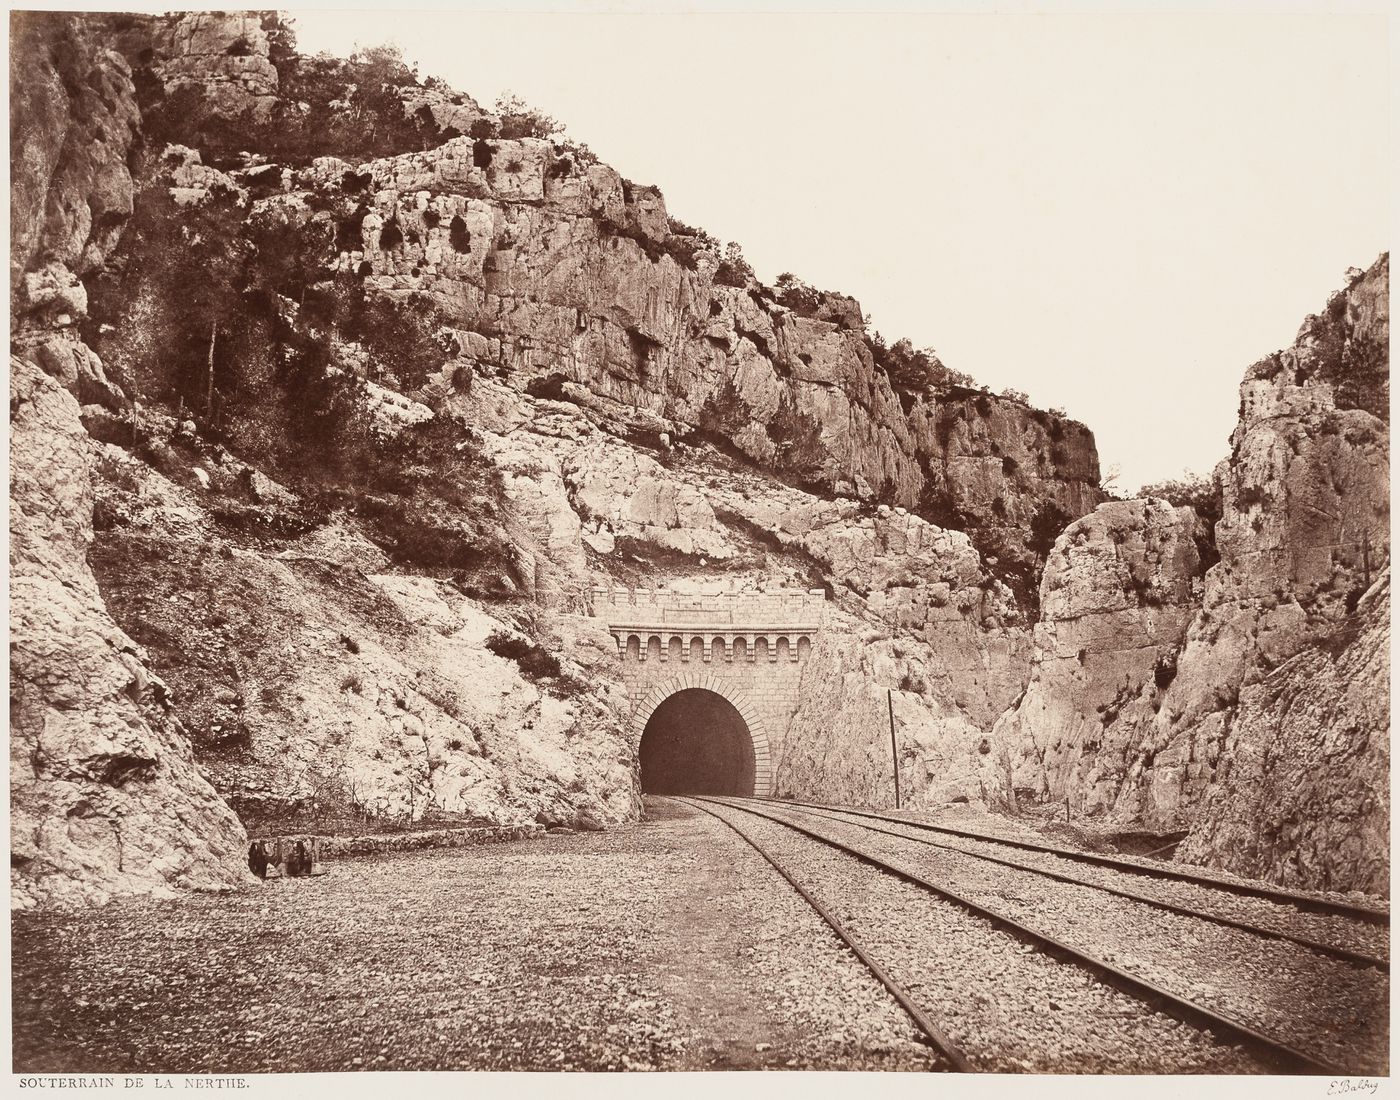 La Nerthe Tunnel, near Marseilles